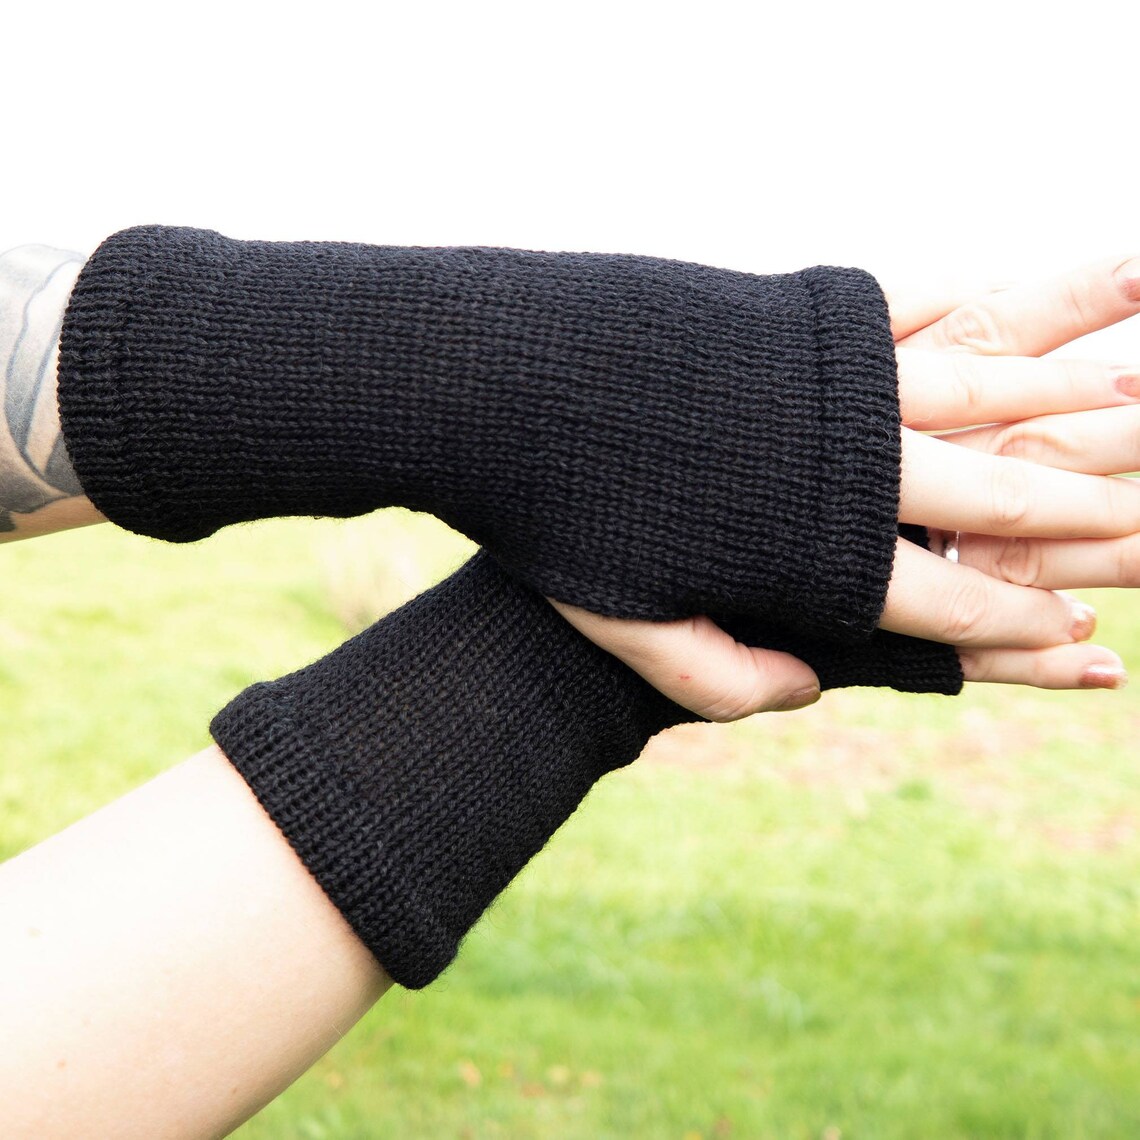 #Black #Mittens #Fingerless #Gloves #KnitGloves #ArmWarmers #merino #wool #WristWarmers #Boho #mittens #handmade mittens #giftforher #giftforhim 

etsy.me/47ehMGf